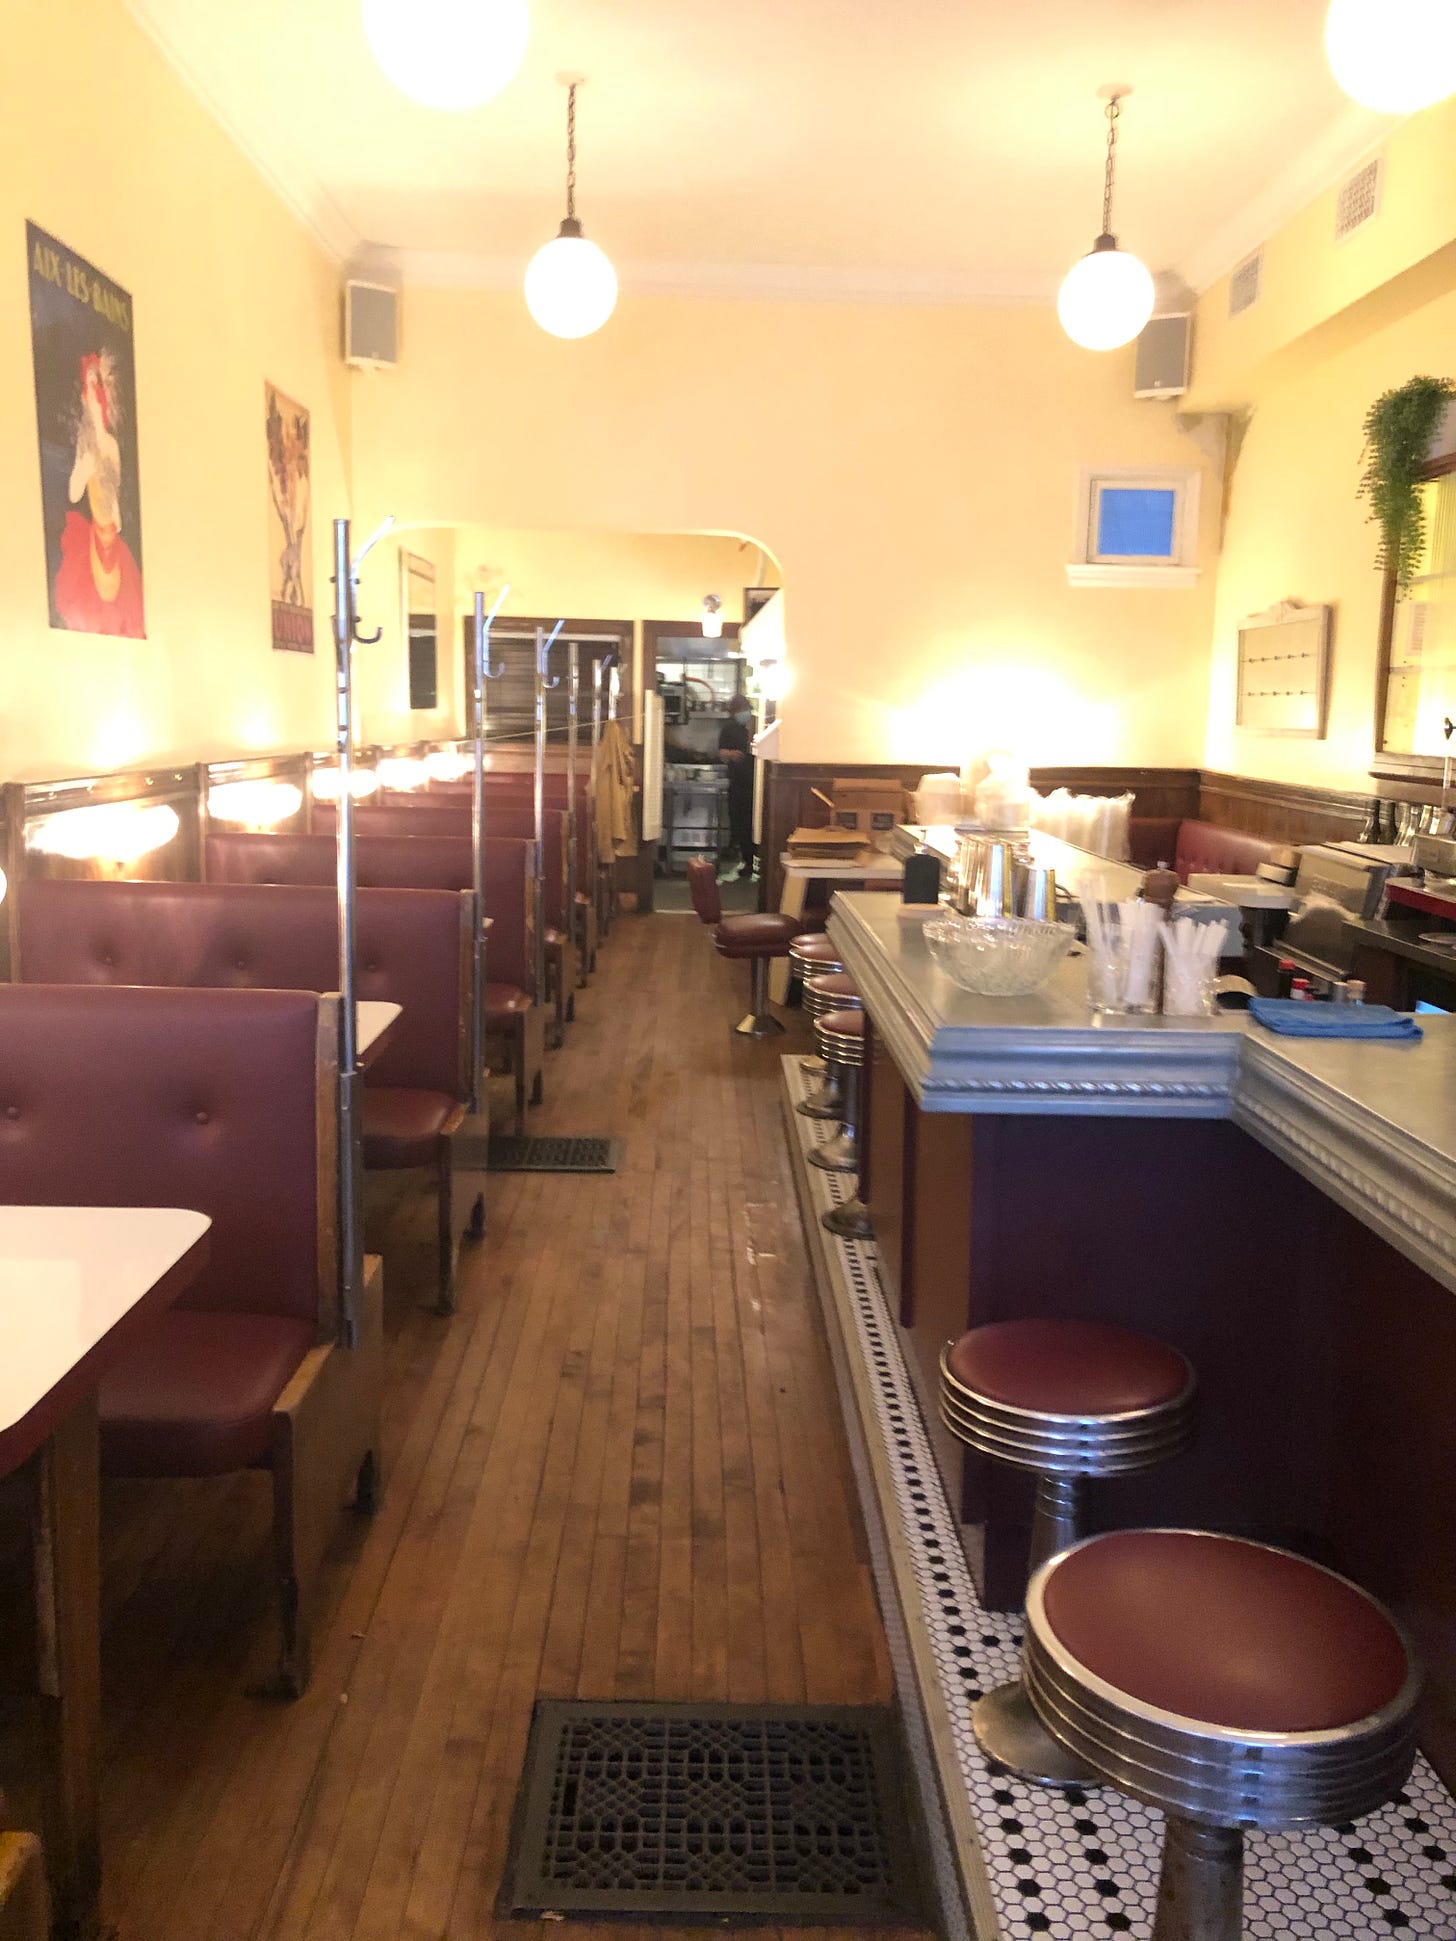 Interior shot of Le Swan restaurant, empty